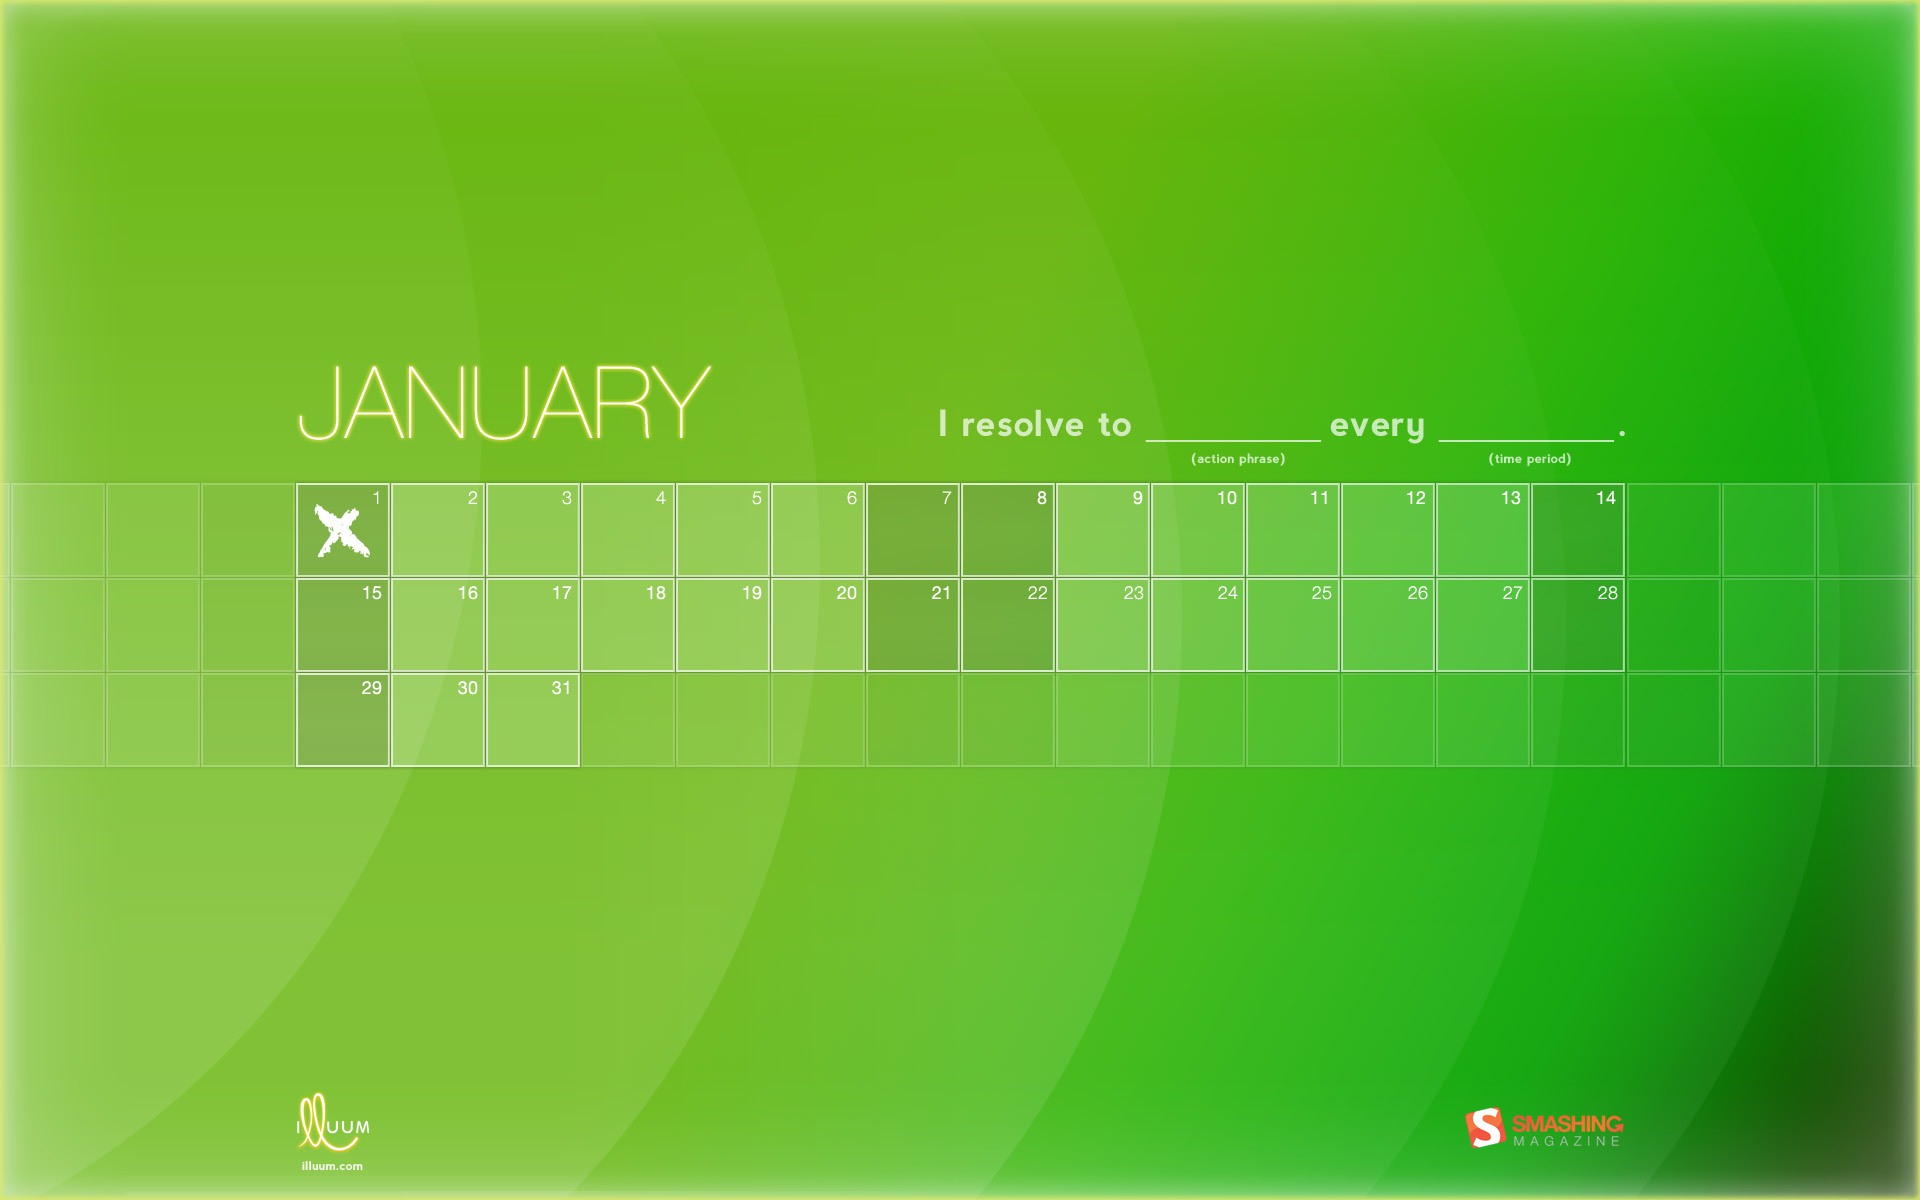 January 2012 Calendar Wallpapers #14 - 1920x1200